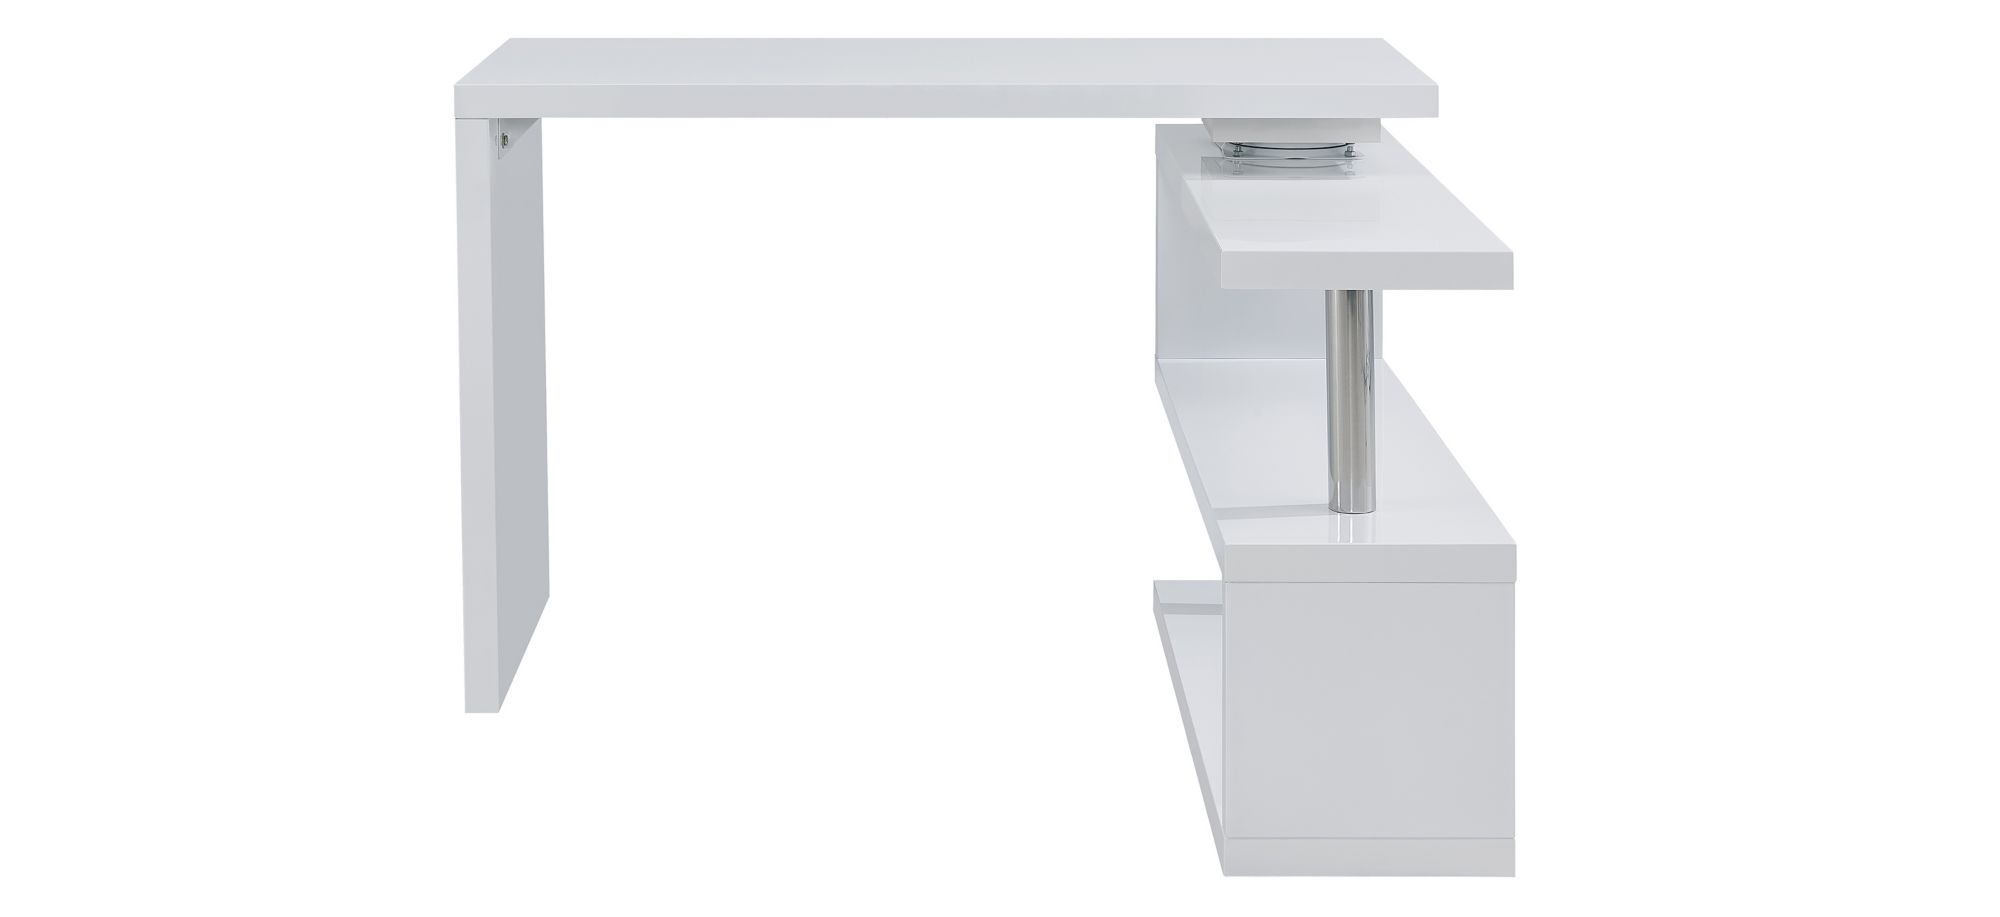 Yates Multifunctional Corner Desk in White by SEI Furniture